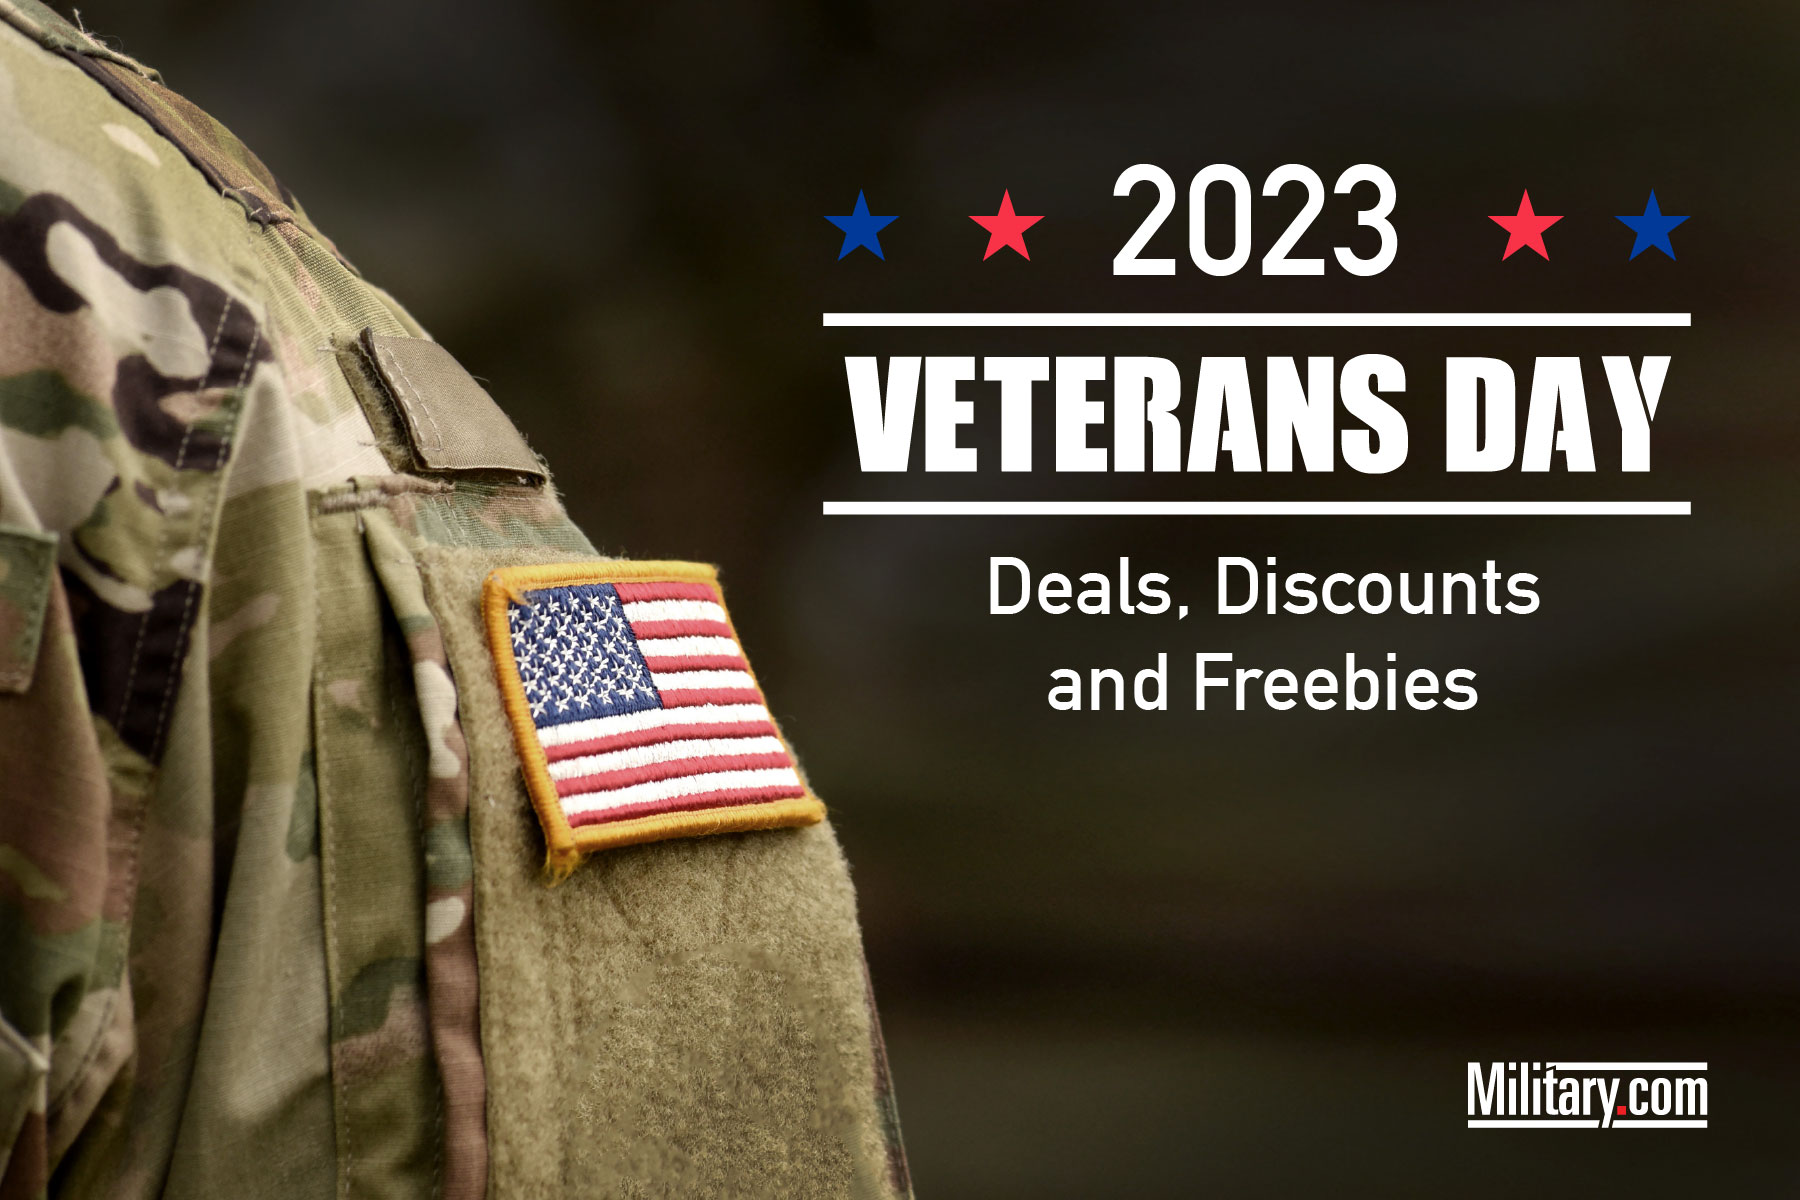 Discount-Images-Veterans-Day-Deals-2023.jpg